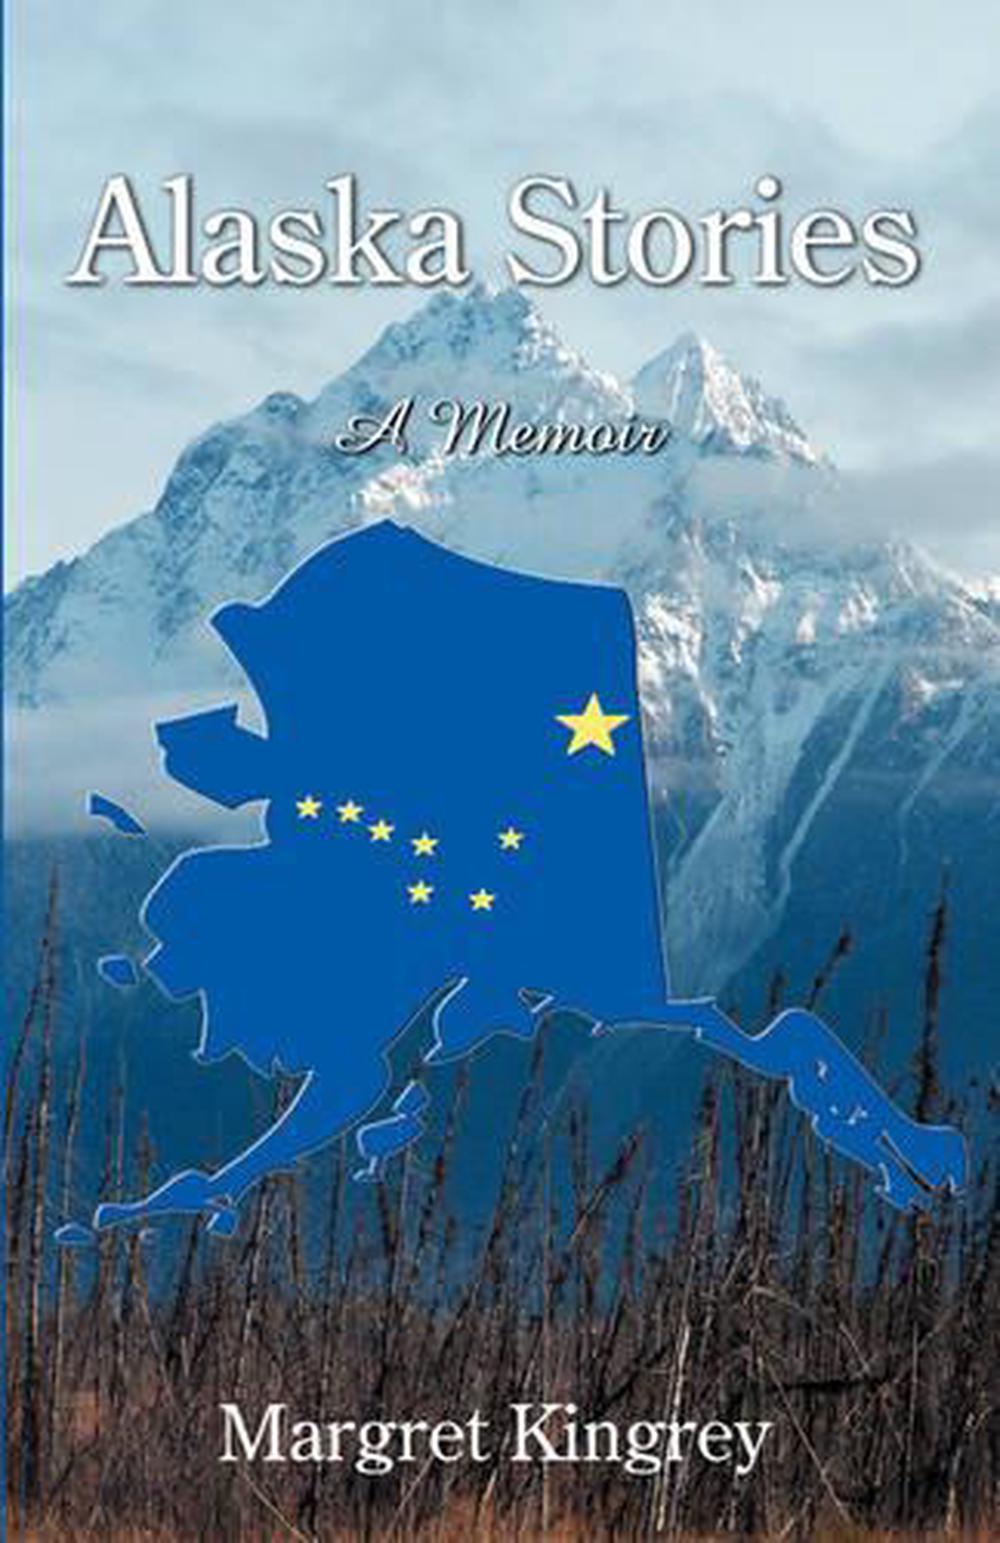 Diary of an Alaskan Madam by Lorina Ewing